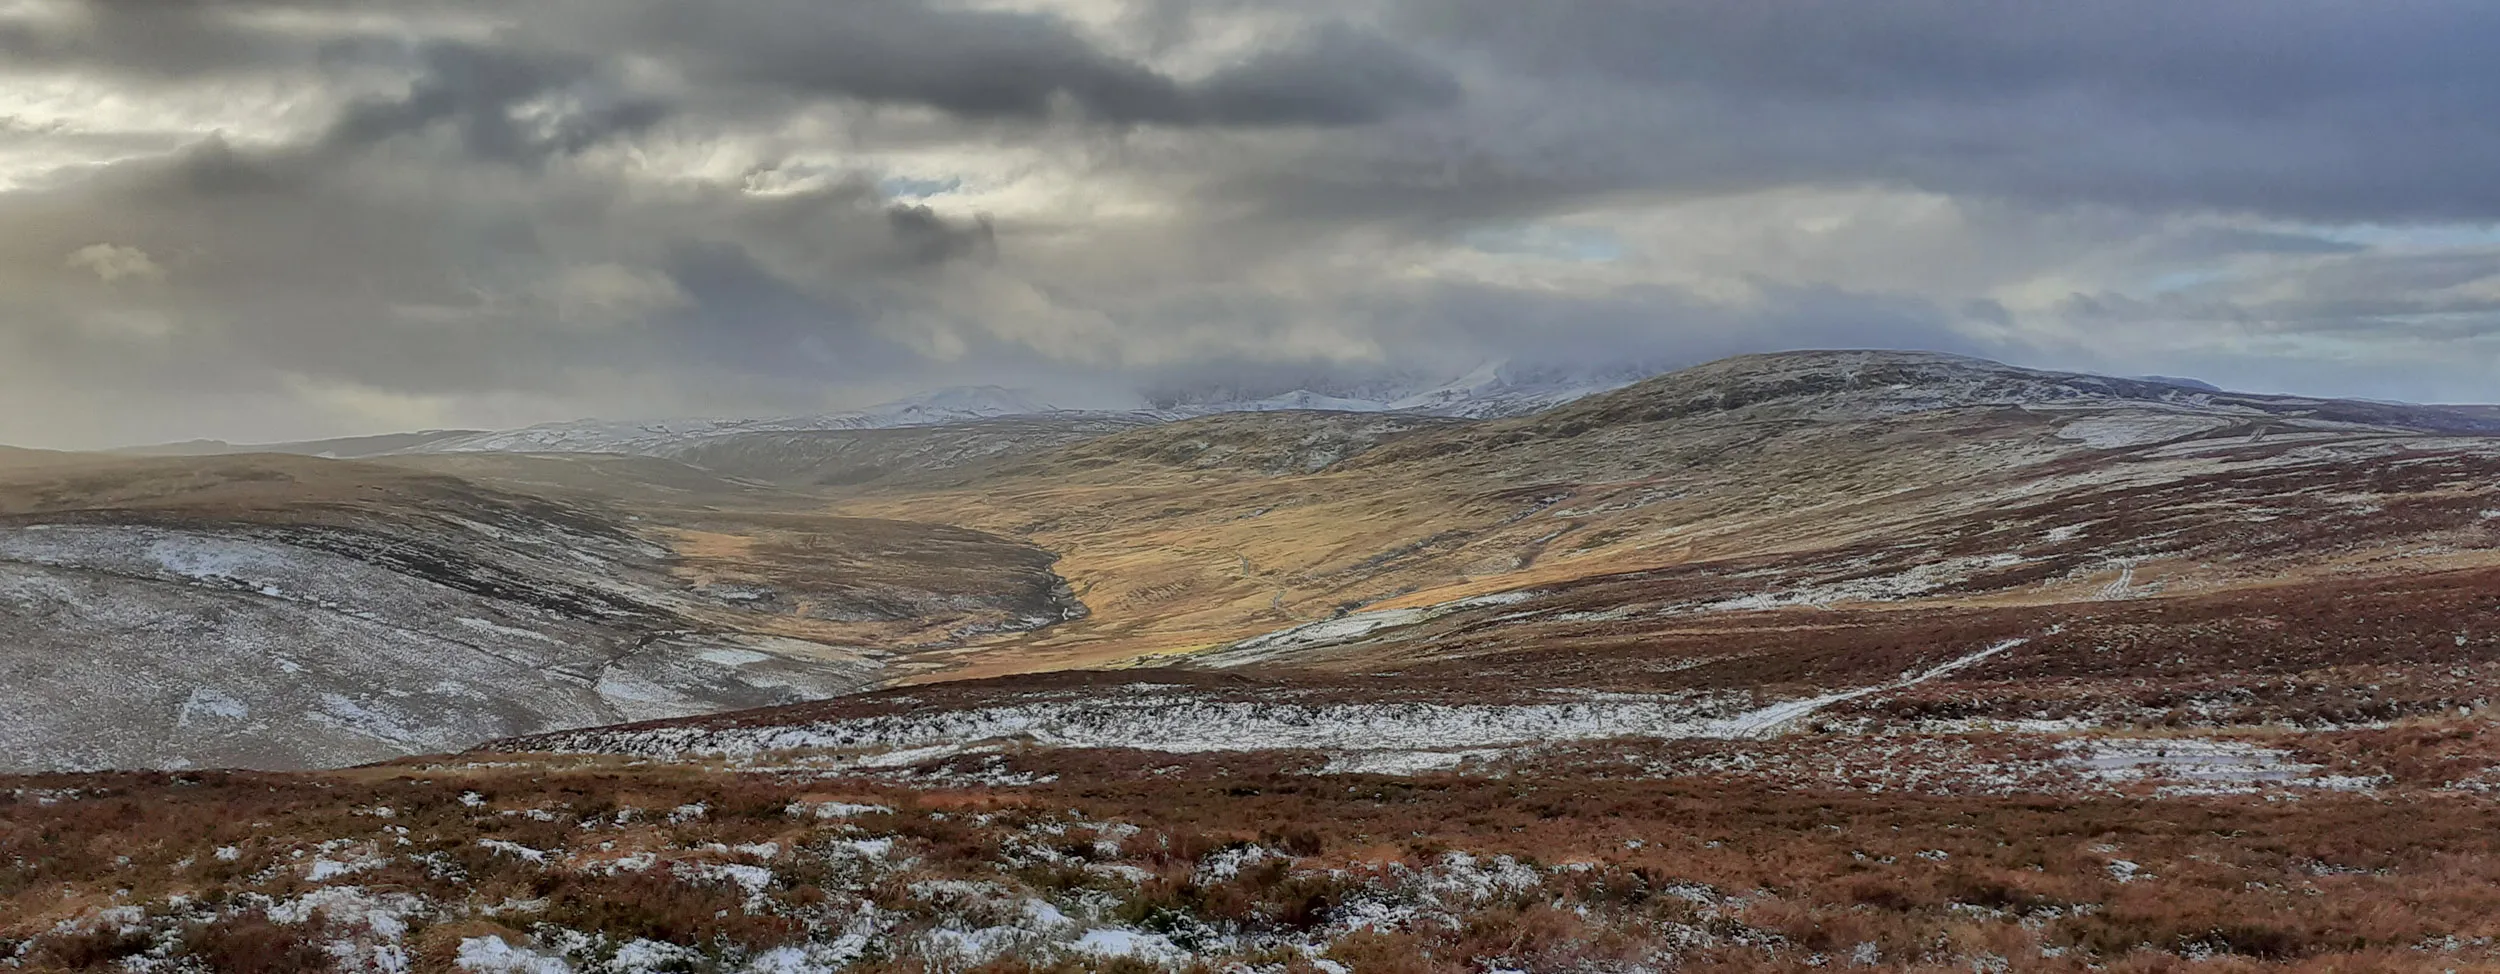 A view across snowy heathland